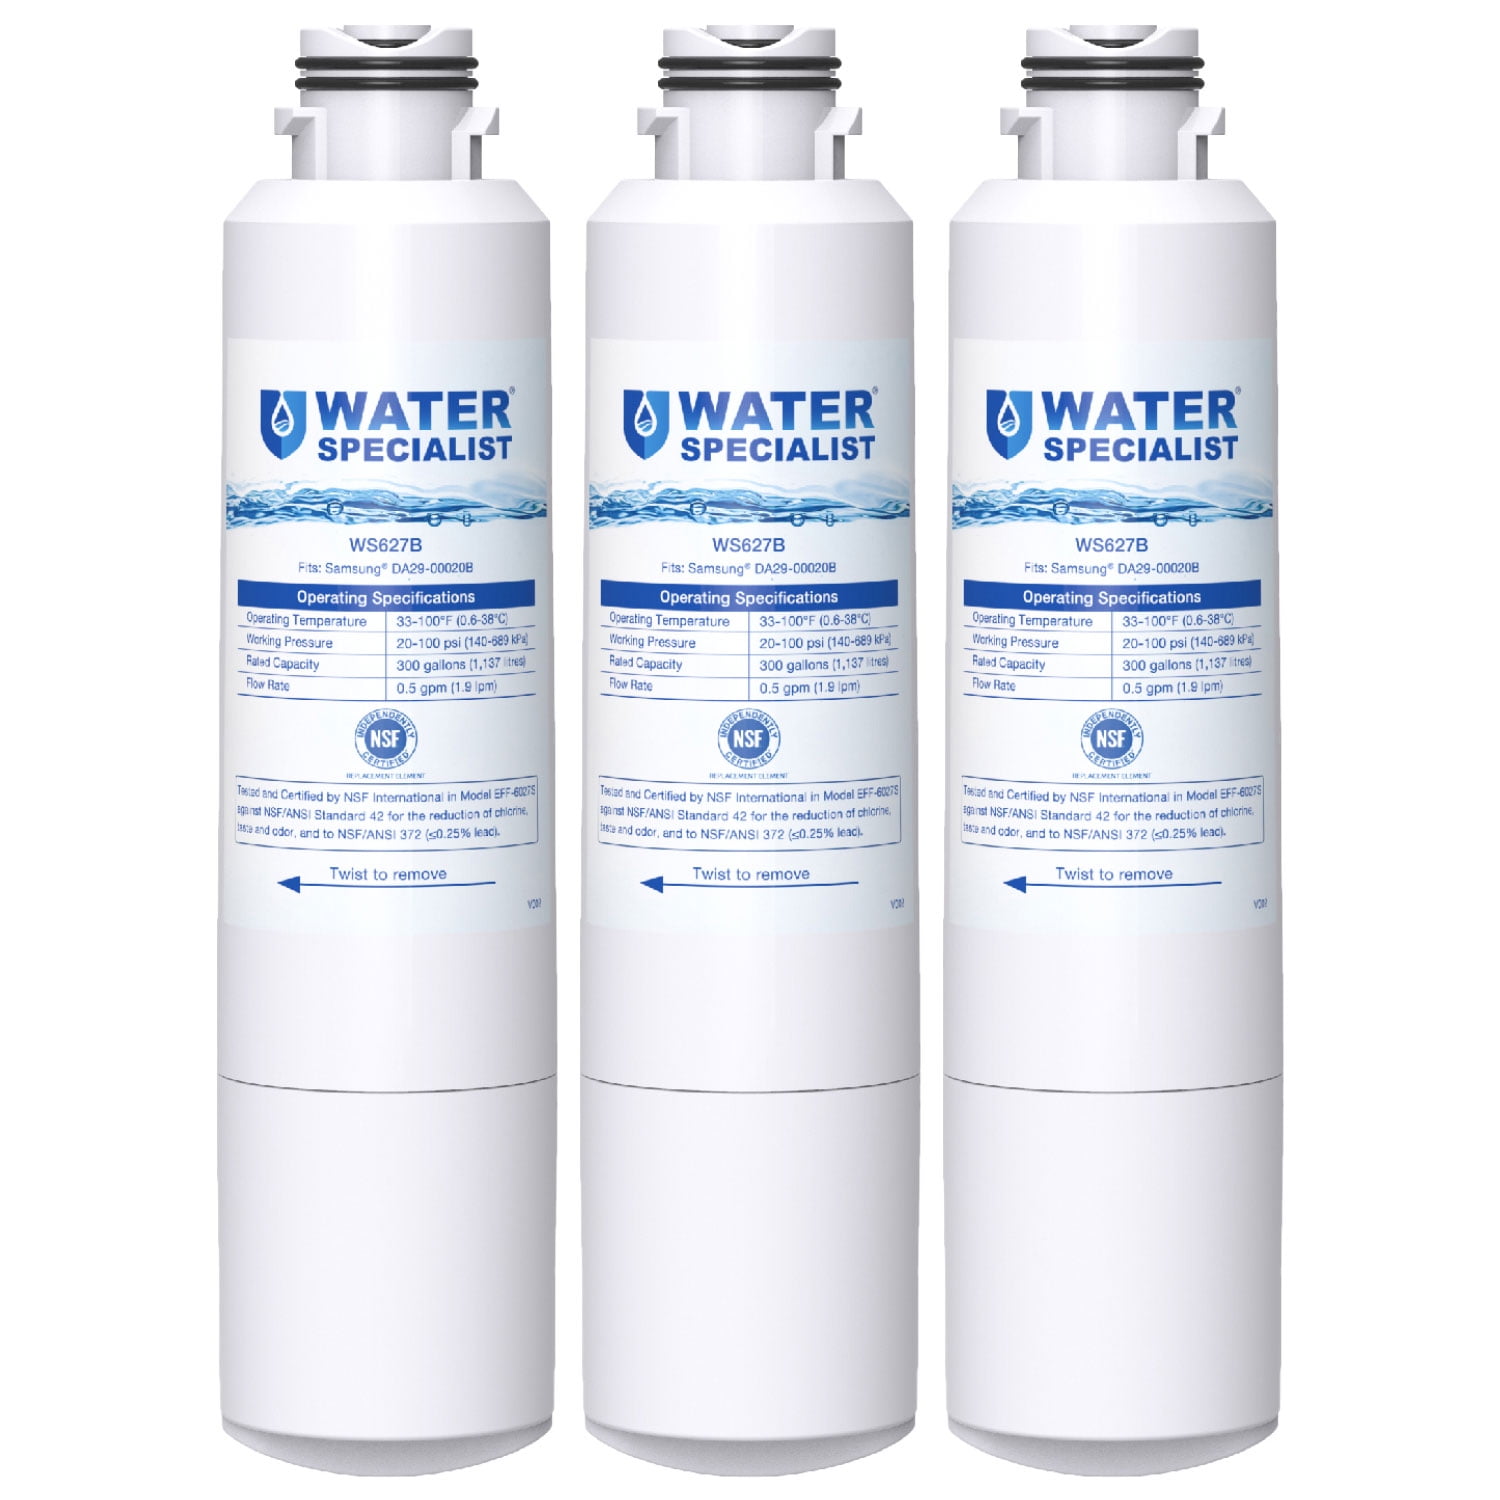 Waterdrop DA29-00020B Refrigerator Replacement Water Filter for Samsung  HAF-CIN/EXP, DA29-00020B, RF28HMEDBSR, 1-Pack B-WD-F27 - The Home Depot